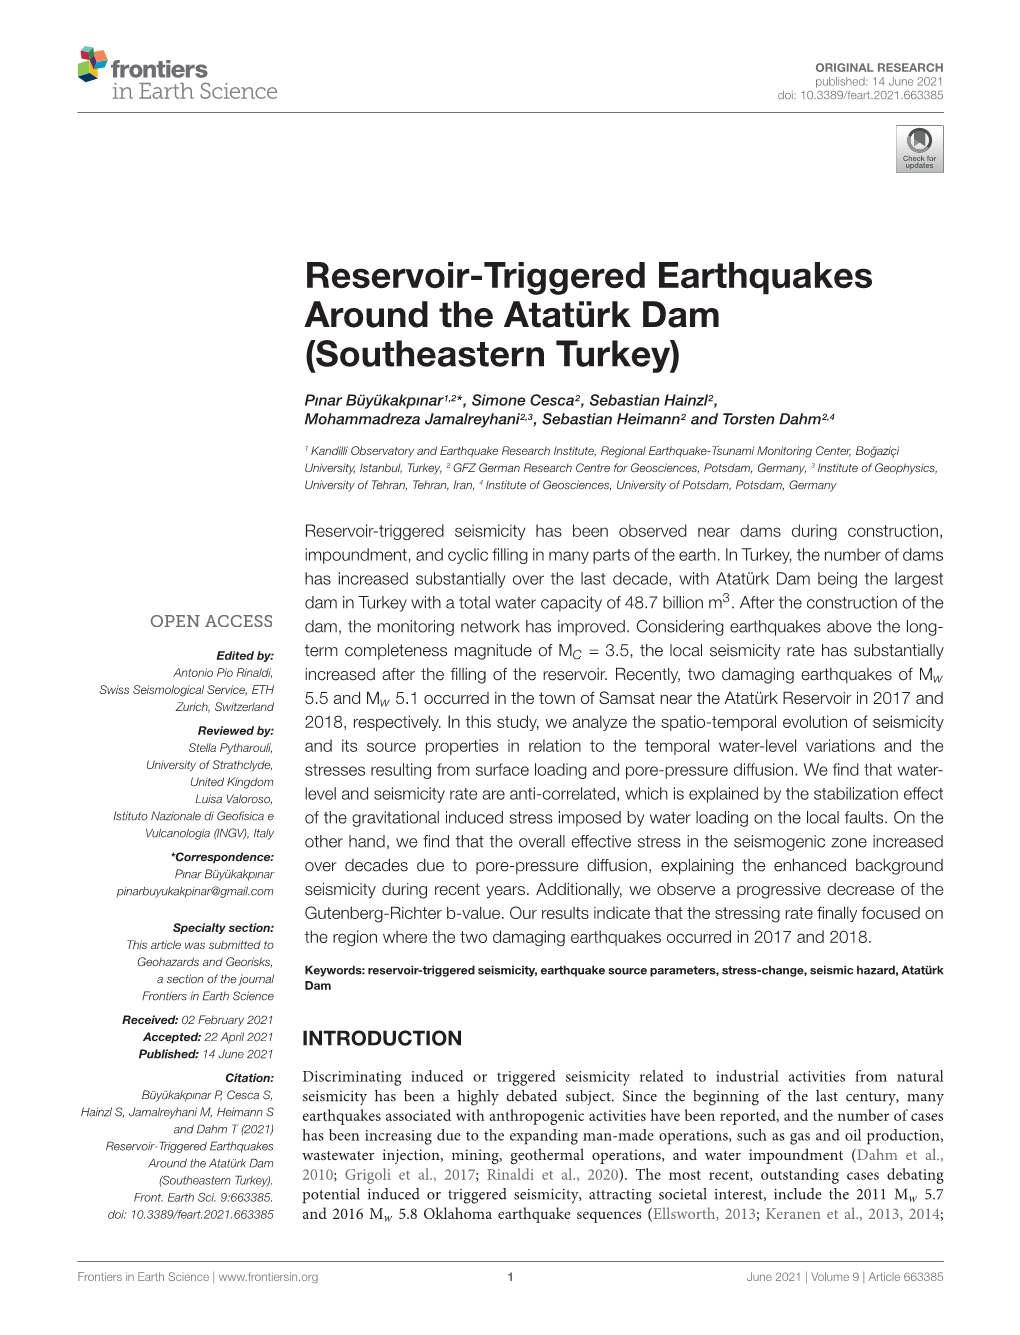 Reservoir-Triggered Earthquakes Around the Atatürk Dam (Southeastern Turkey)